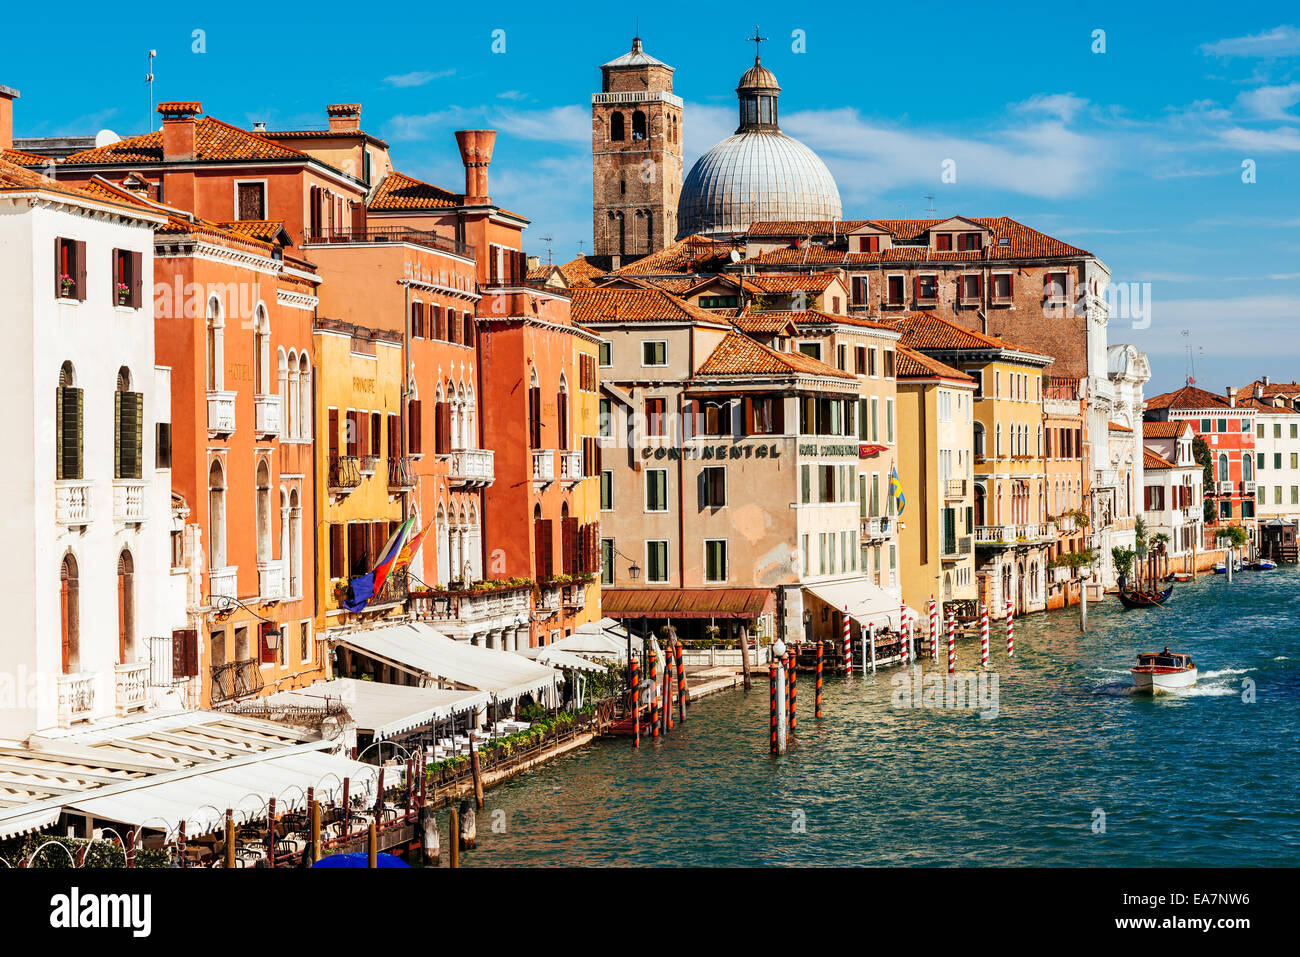 Venedig, Italien - 26. Oktober 2014: Kirche San Geremia und Hotels am Canale Grande in Venedig Stockfoto